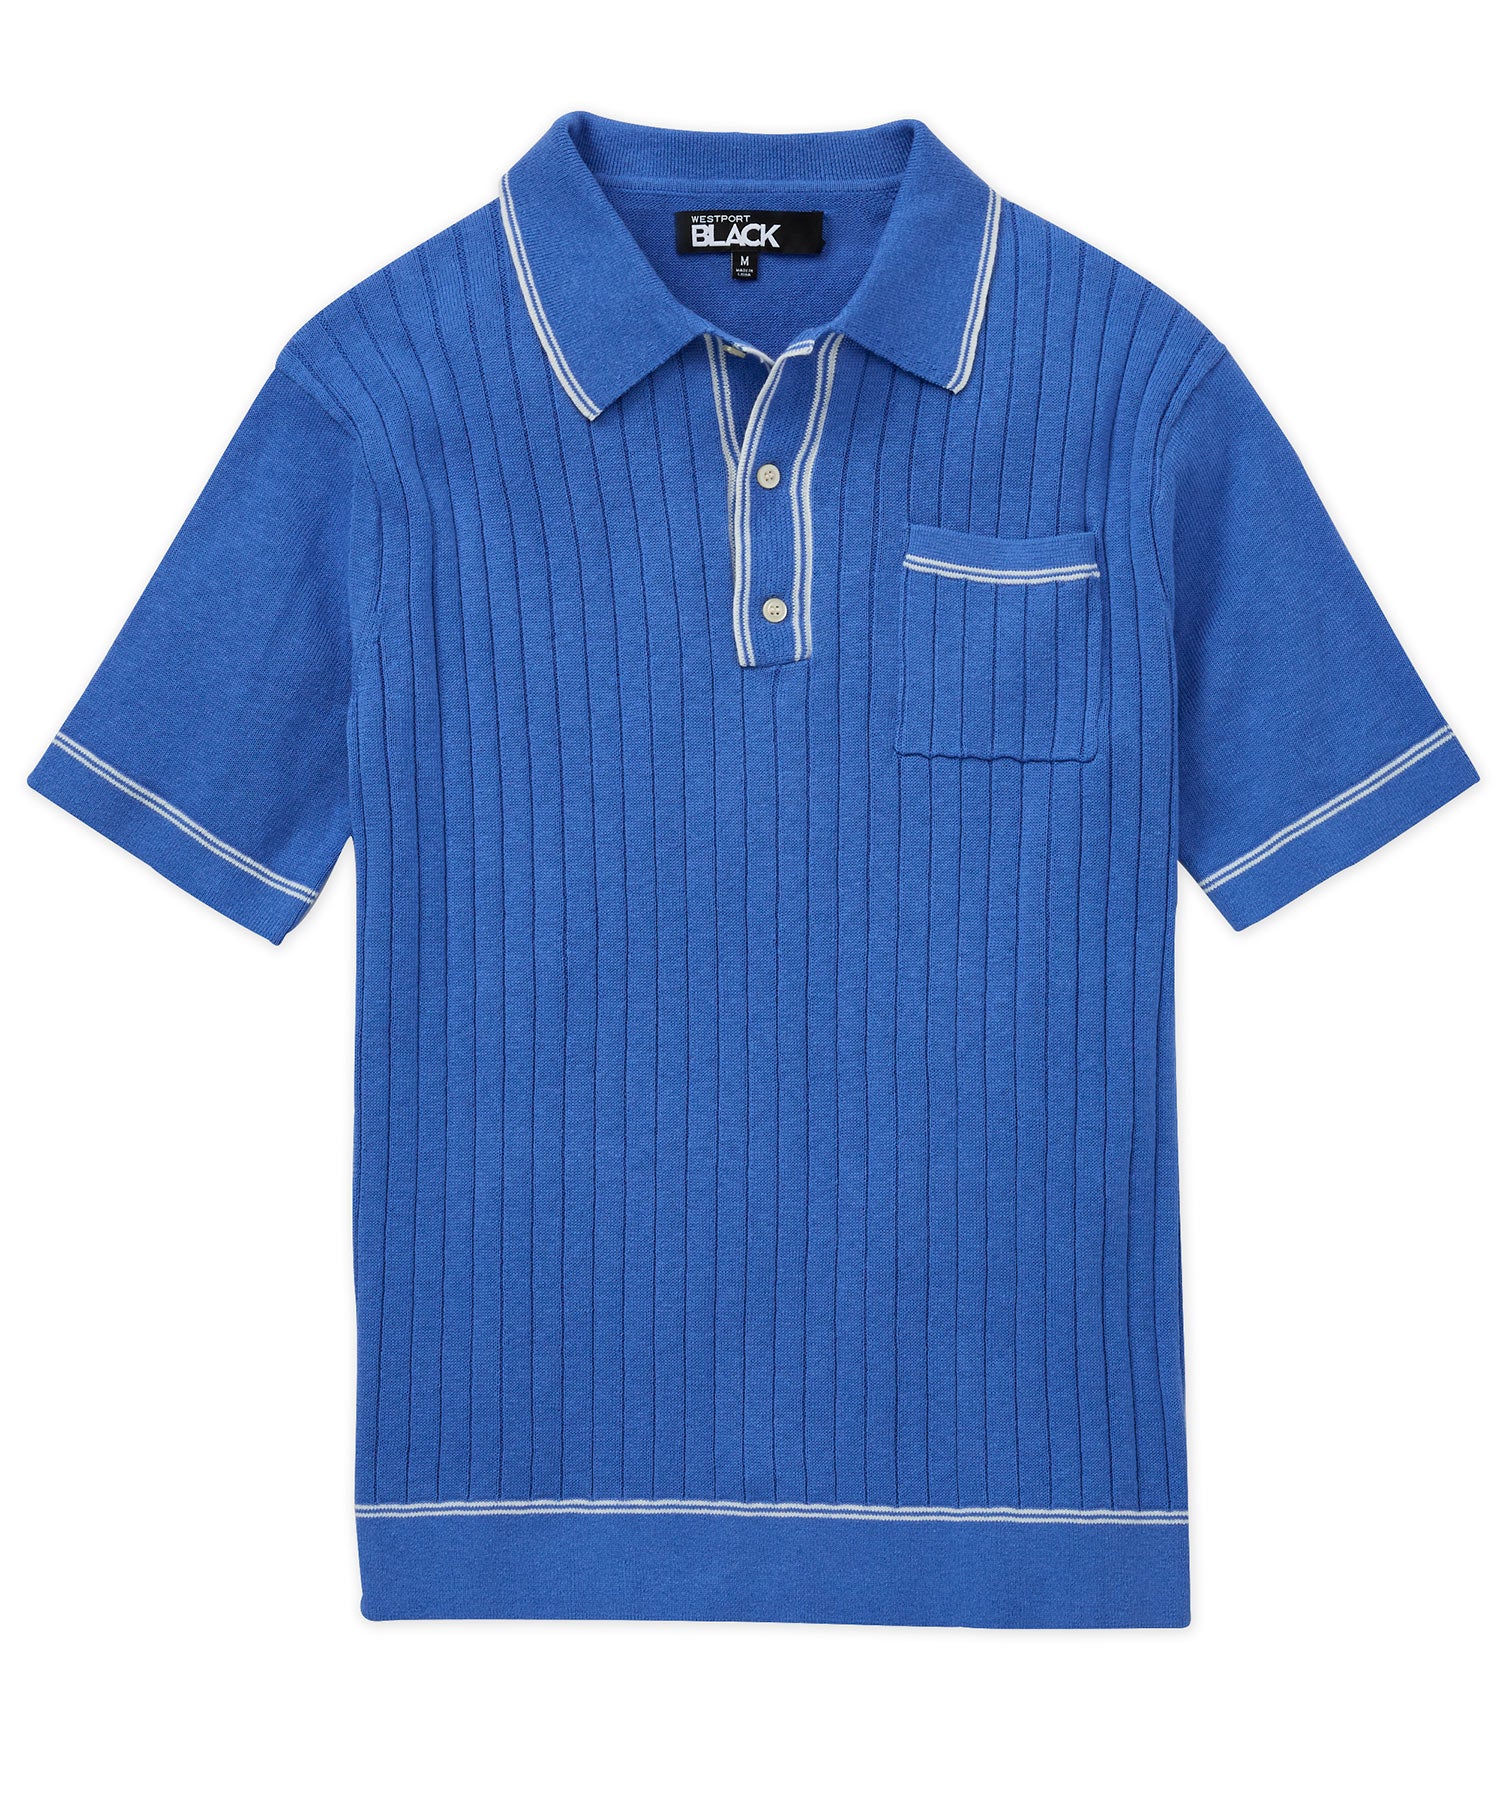 Westport Black Short Sleeve Amici Ribbed Knit Polo Knit Shirt, Men's Big & Tall